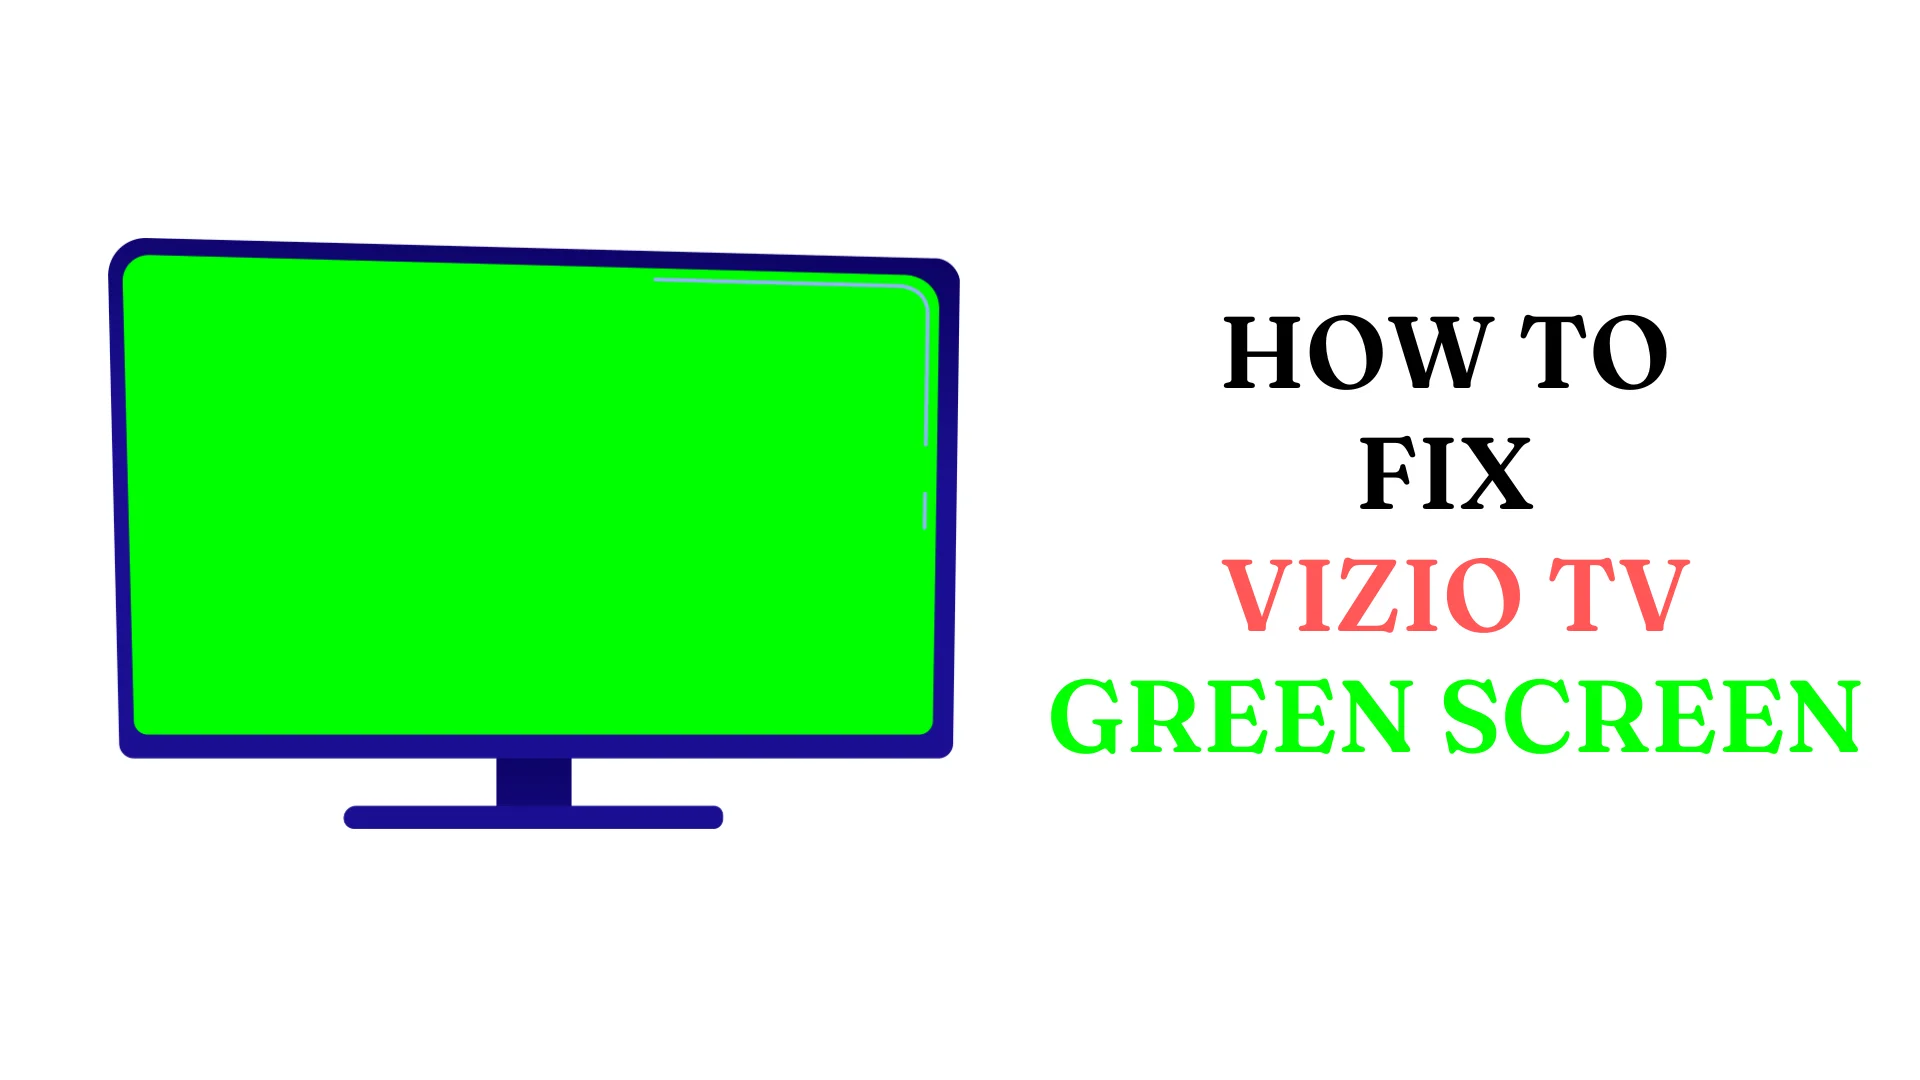 Vizio TV Green Screen